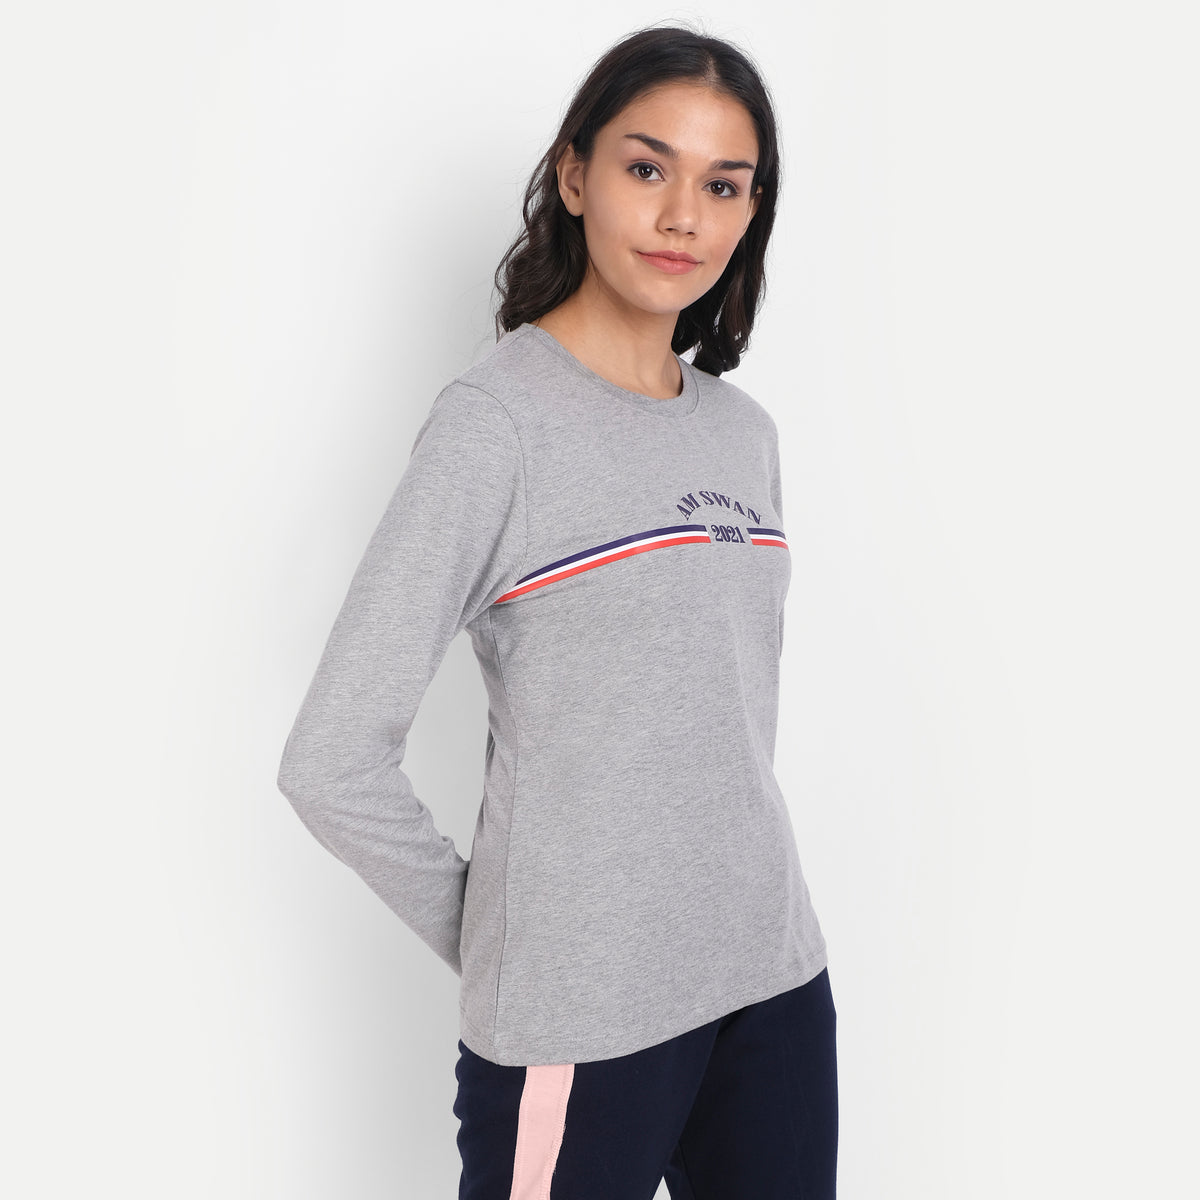 Amswan Women Premium Cotton Printed Full Sleeve T-Shirts